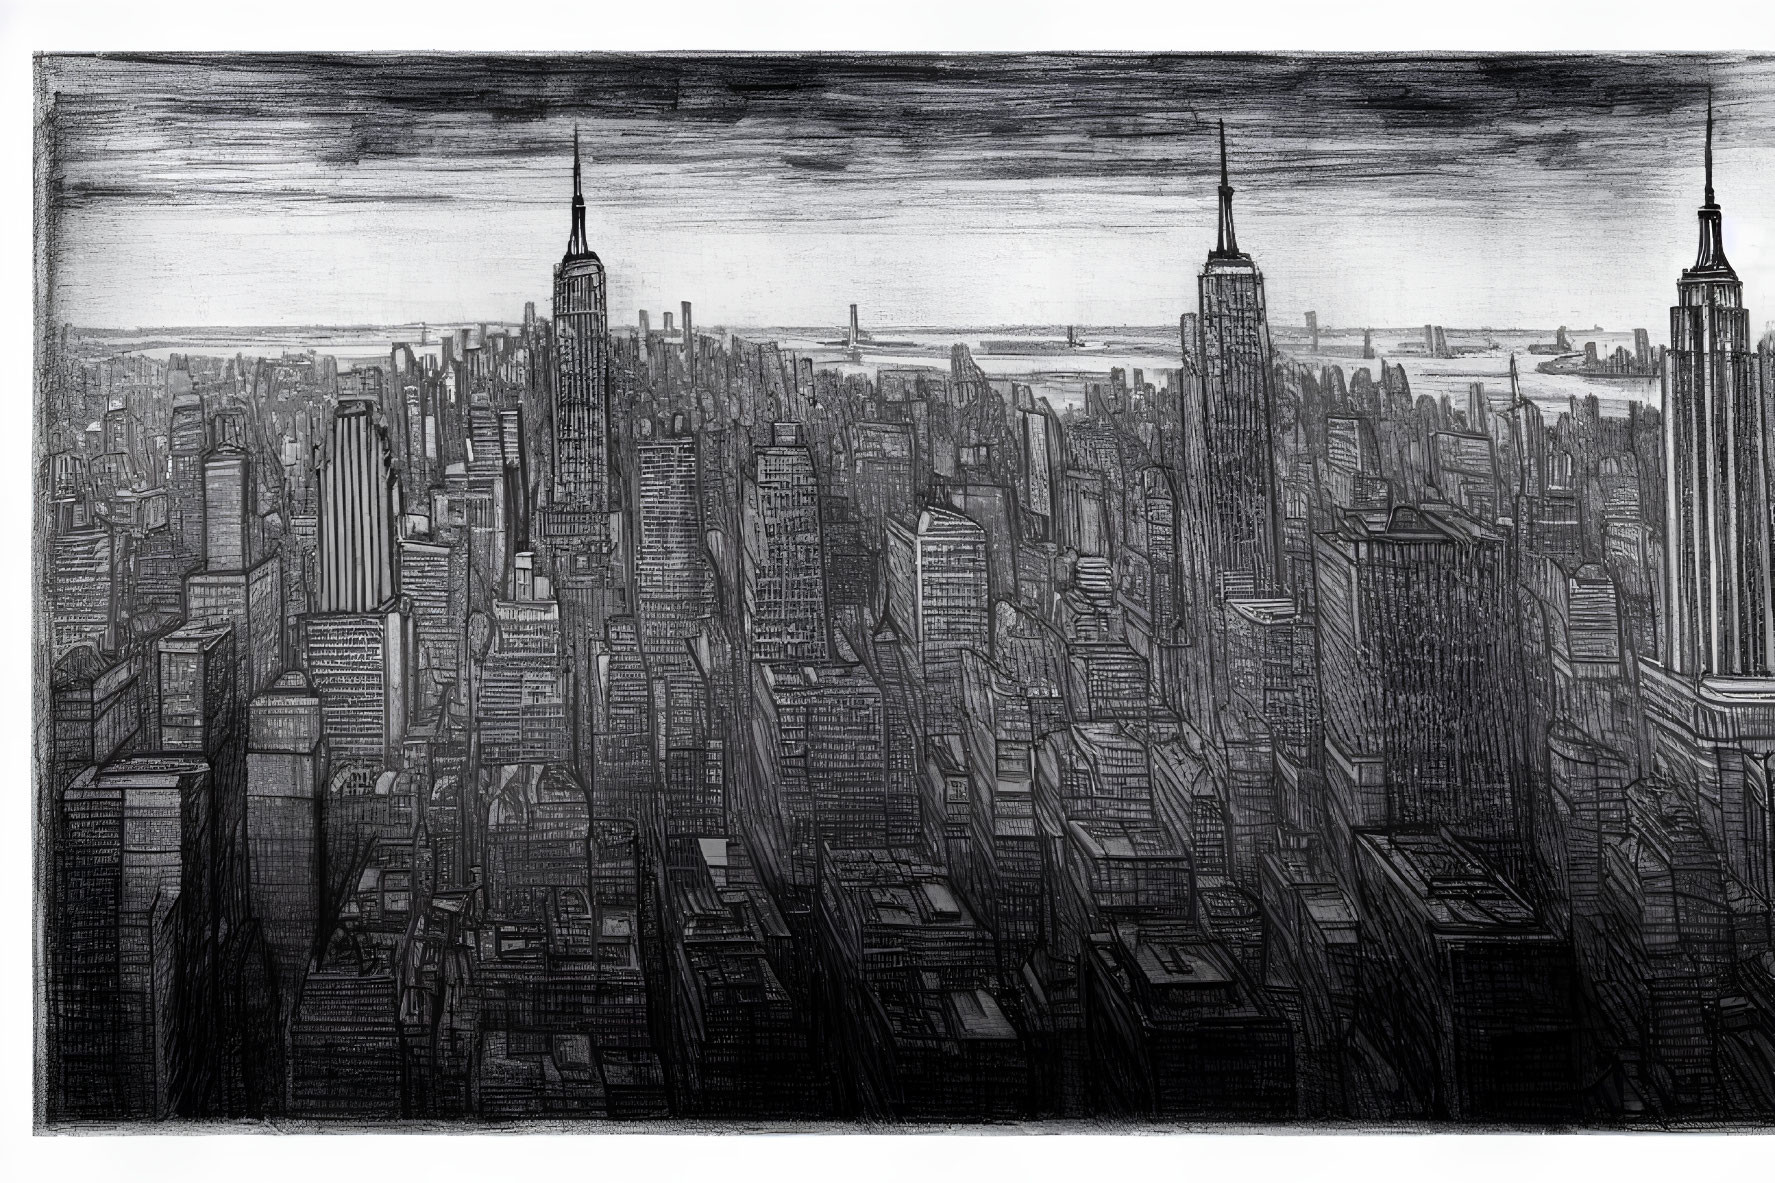 Monochrome sketch of dense urban skyline with skyscrapers, possibly New York City view.